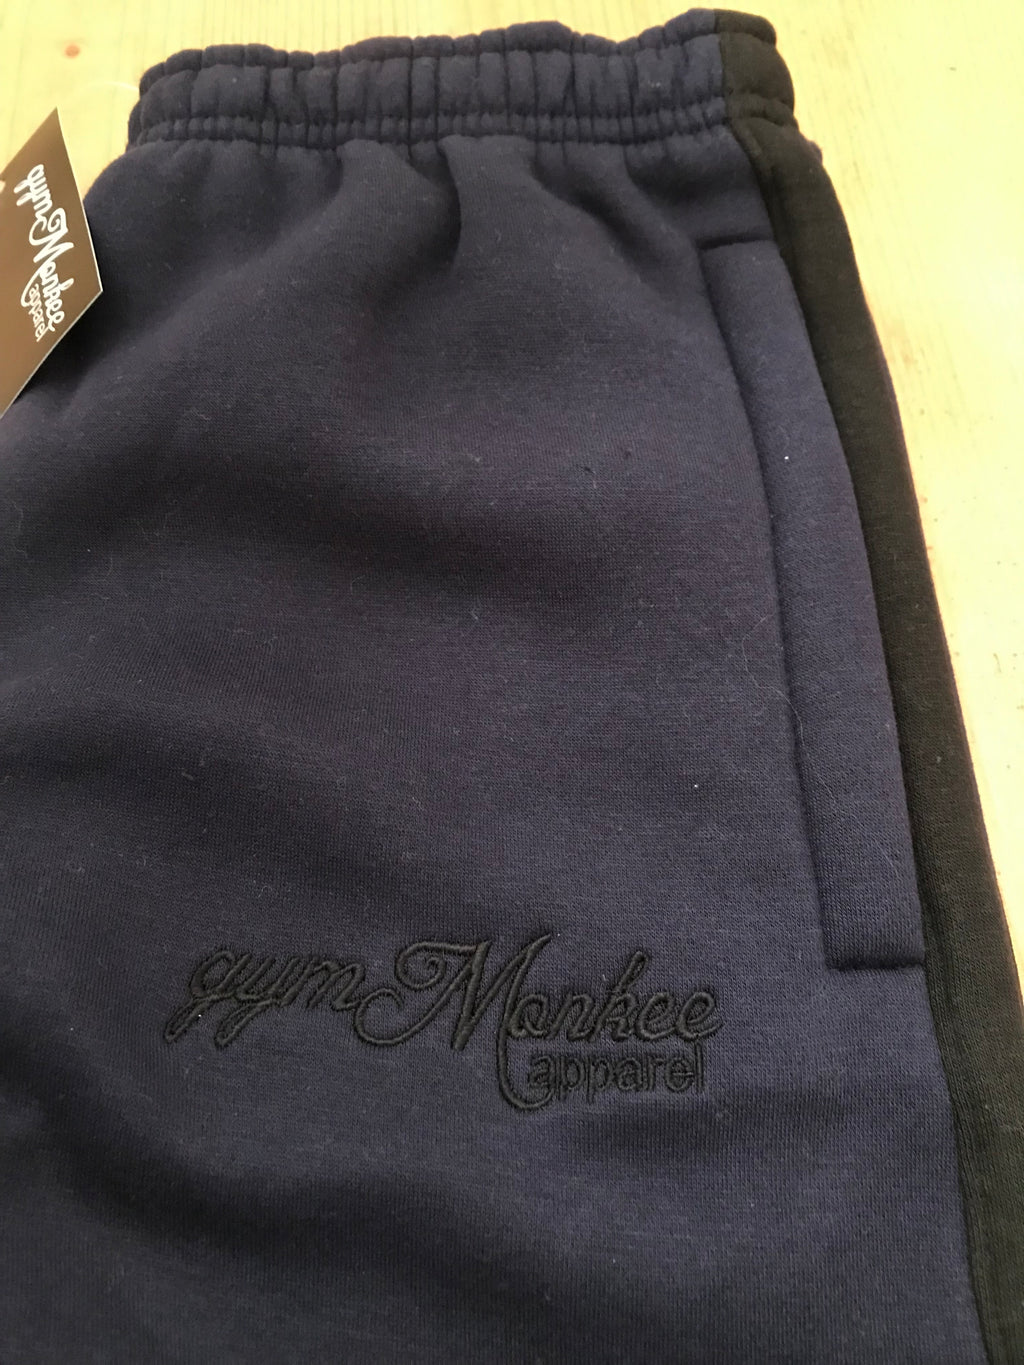 Gym Monkee - Navy Joggers Zipped Pockets